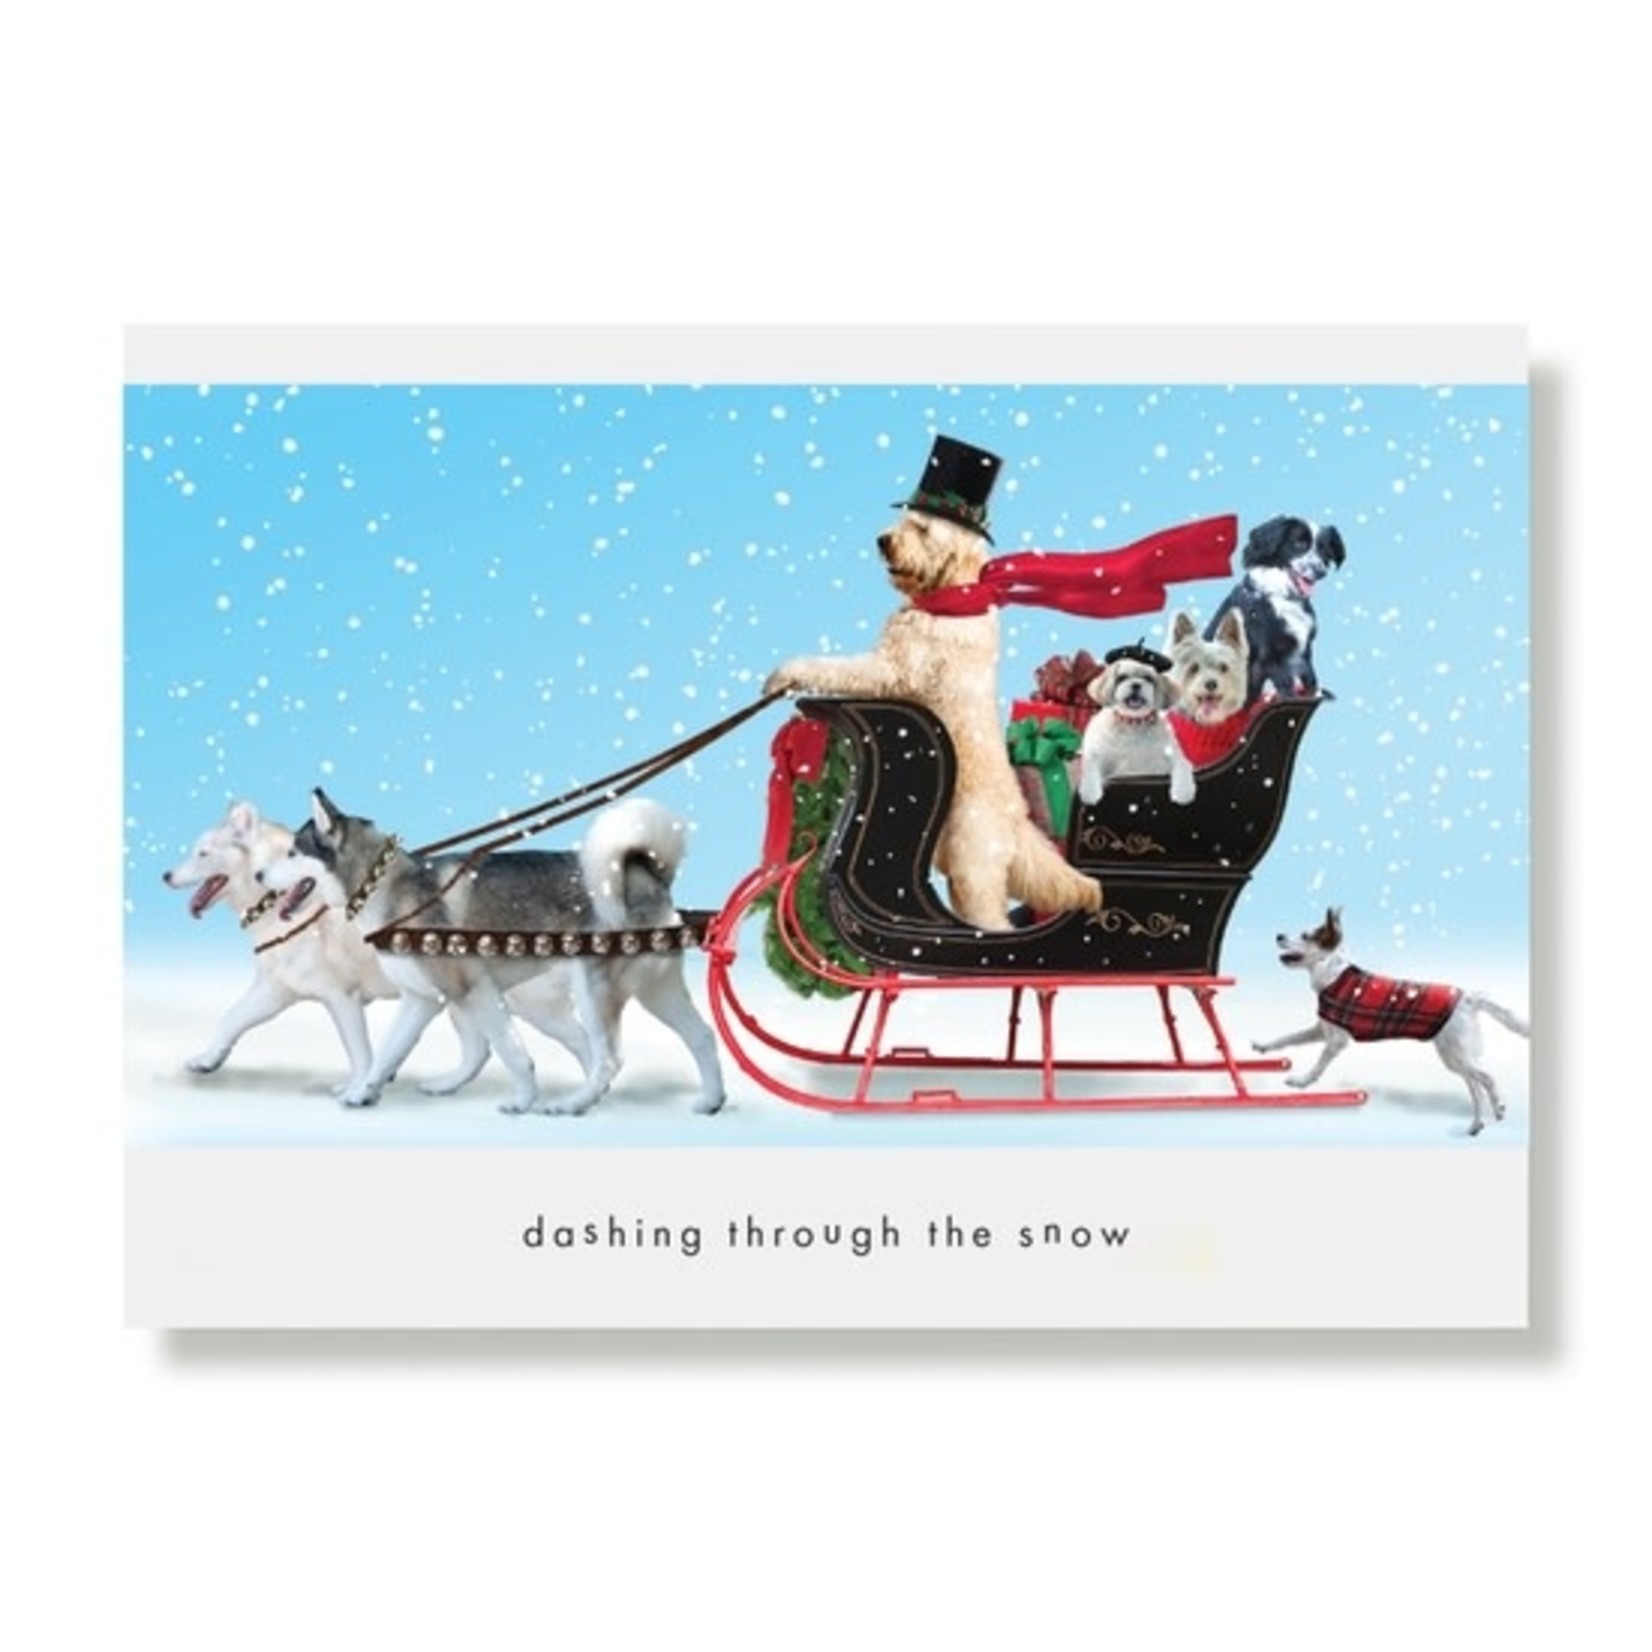 Greeting Cards - Christmas Inouk Ghost Sultan Sleigh Ride